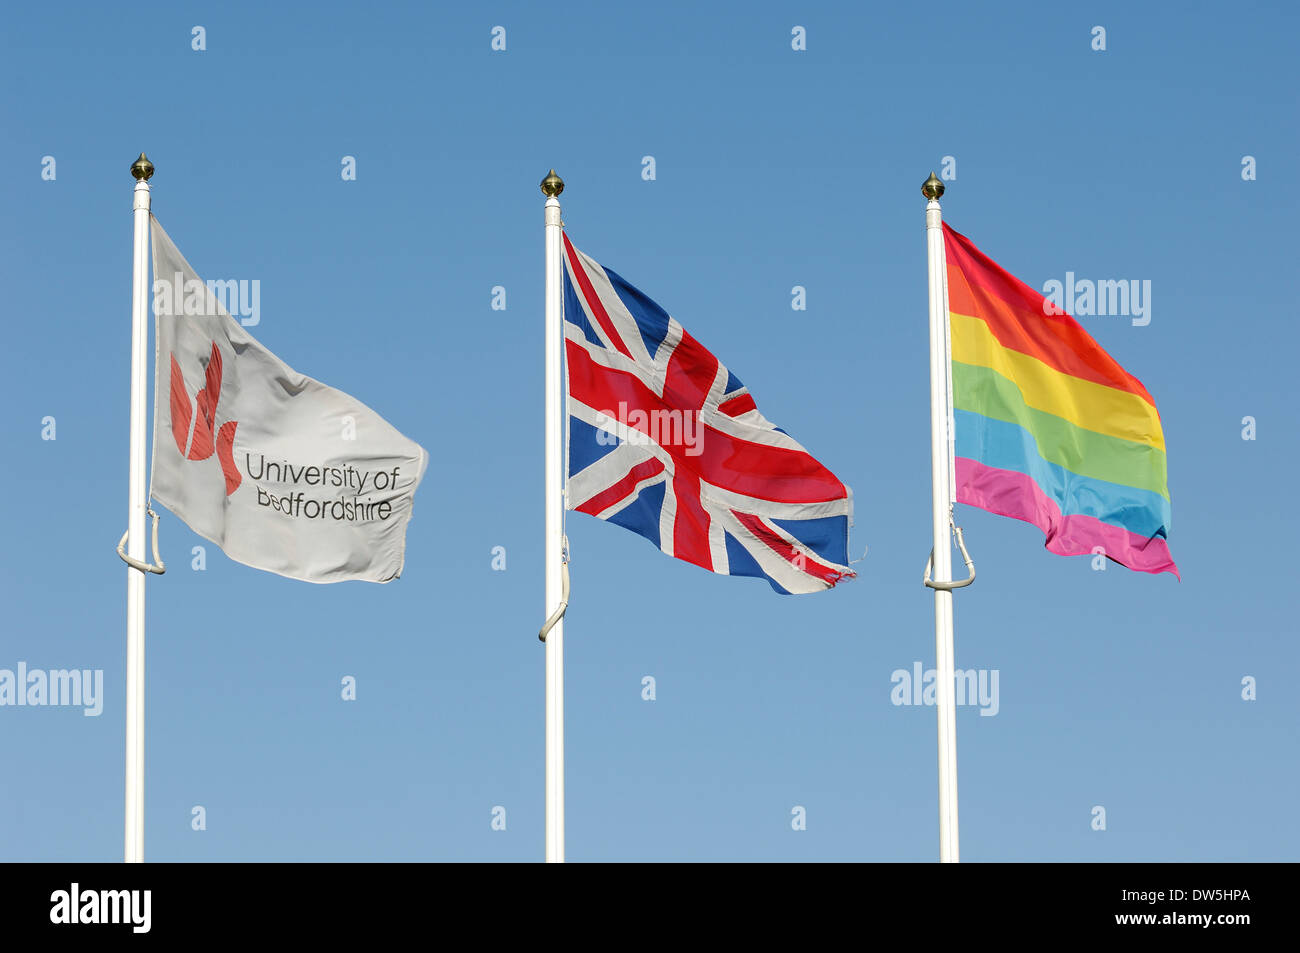 University of Bedfordshire, British Union Jack & Rainbow Flag flutter in the wind Stock Photo